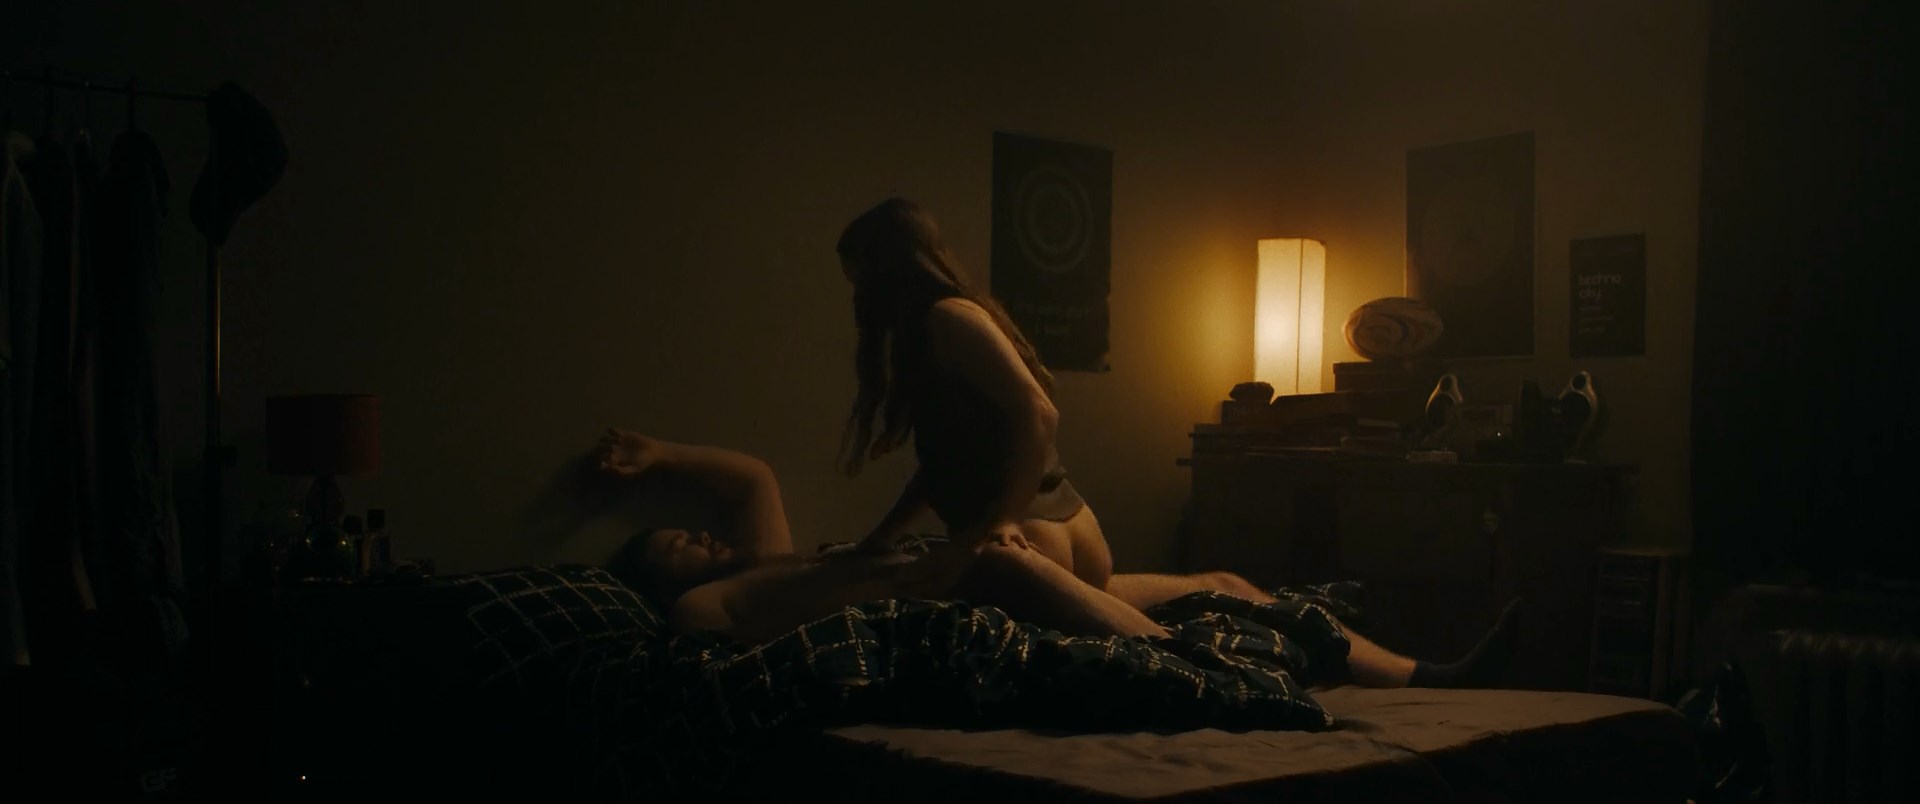 Saint maud sex scene porn